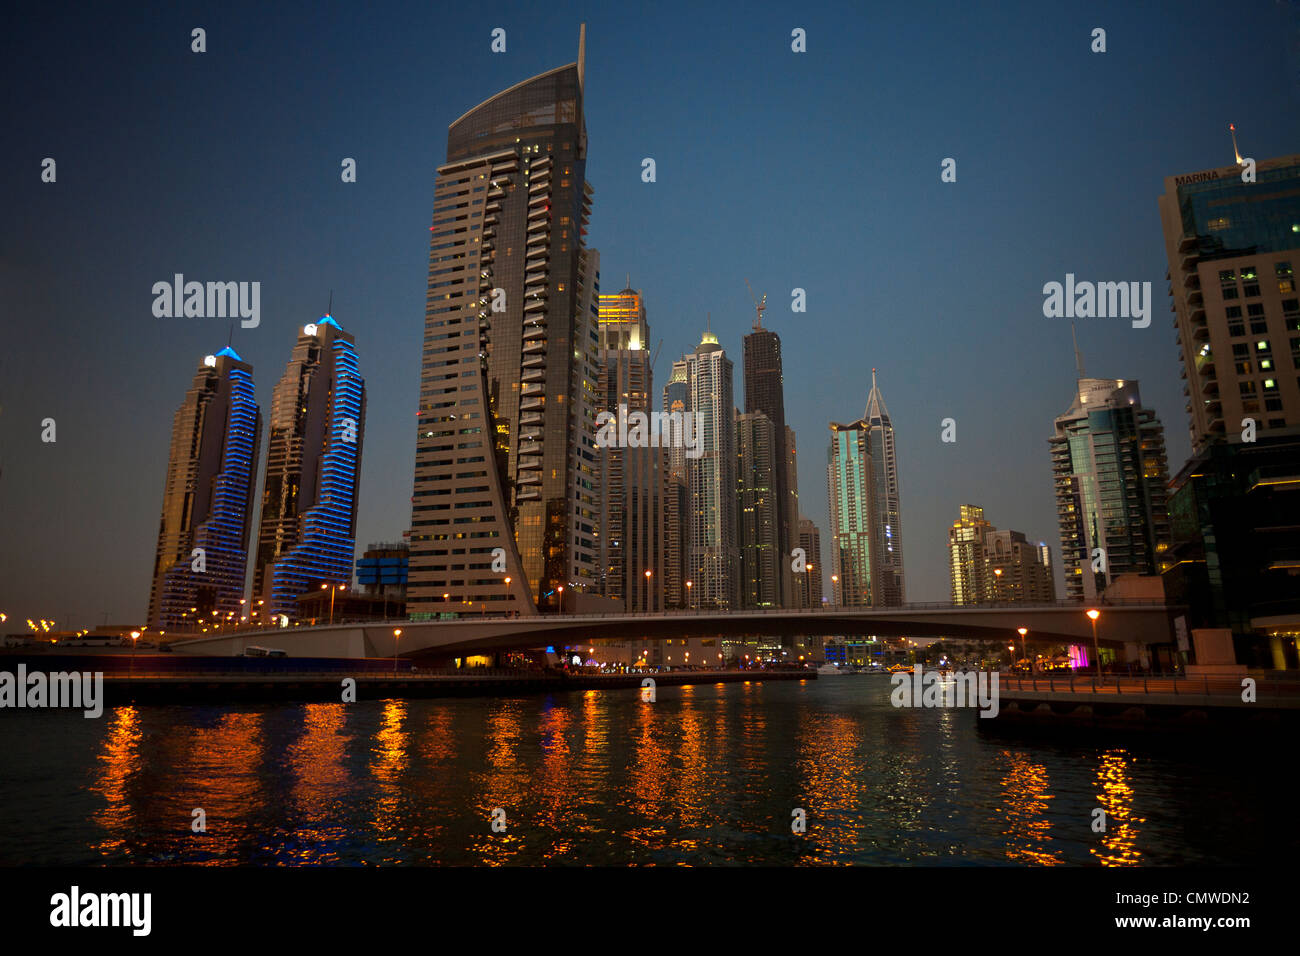 The skyscrapers of the 'Dubai Marina' area by night (Dubai - the United Arab Emirates). Stock Photo